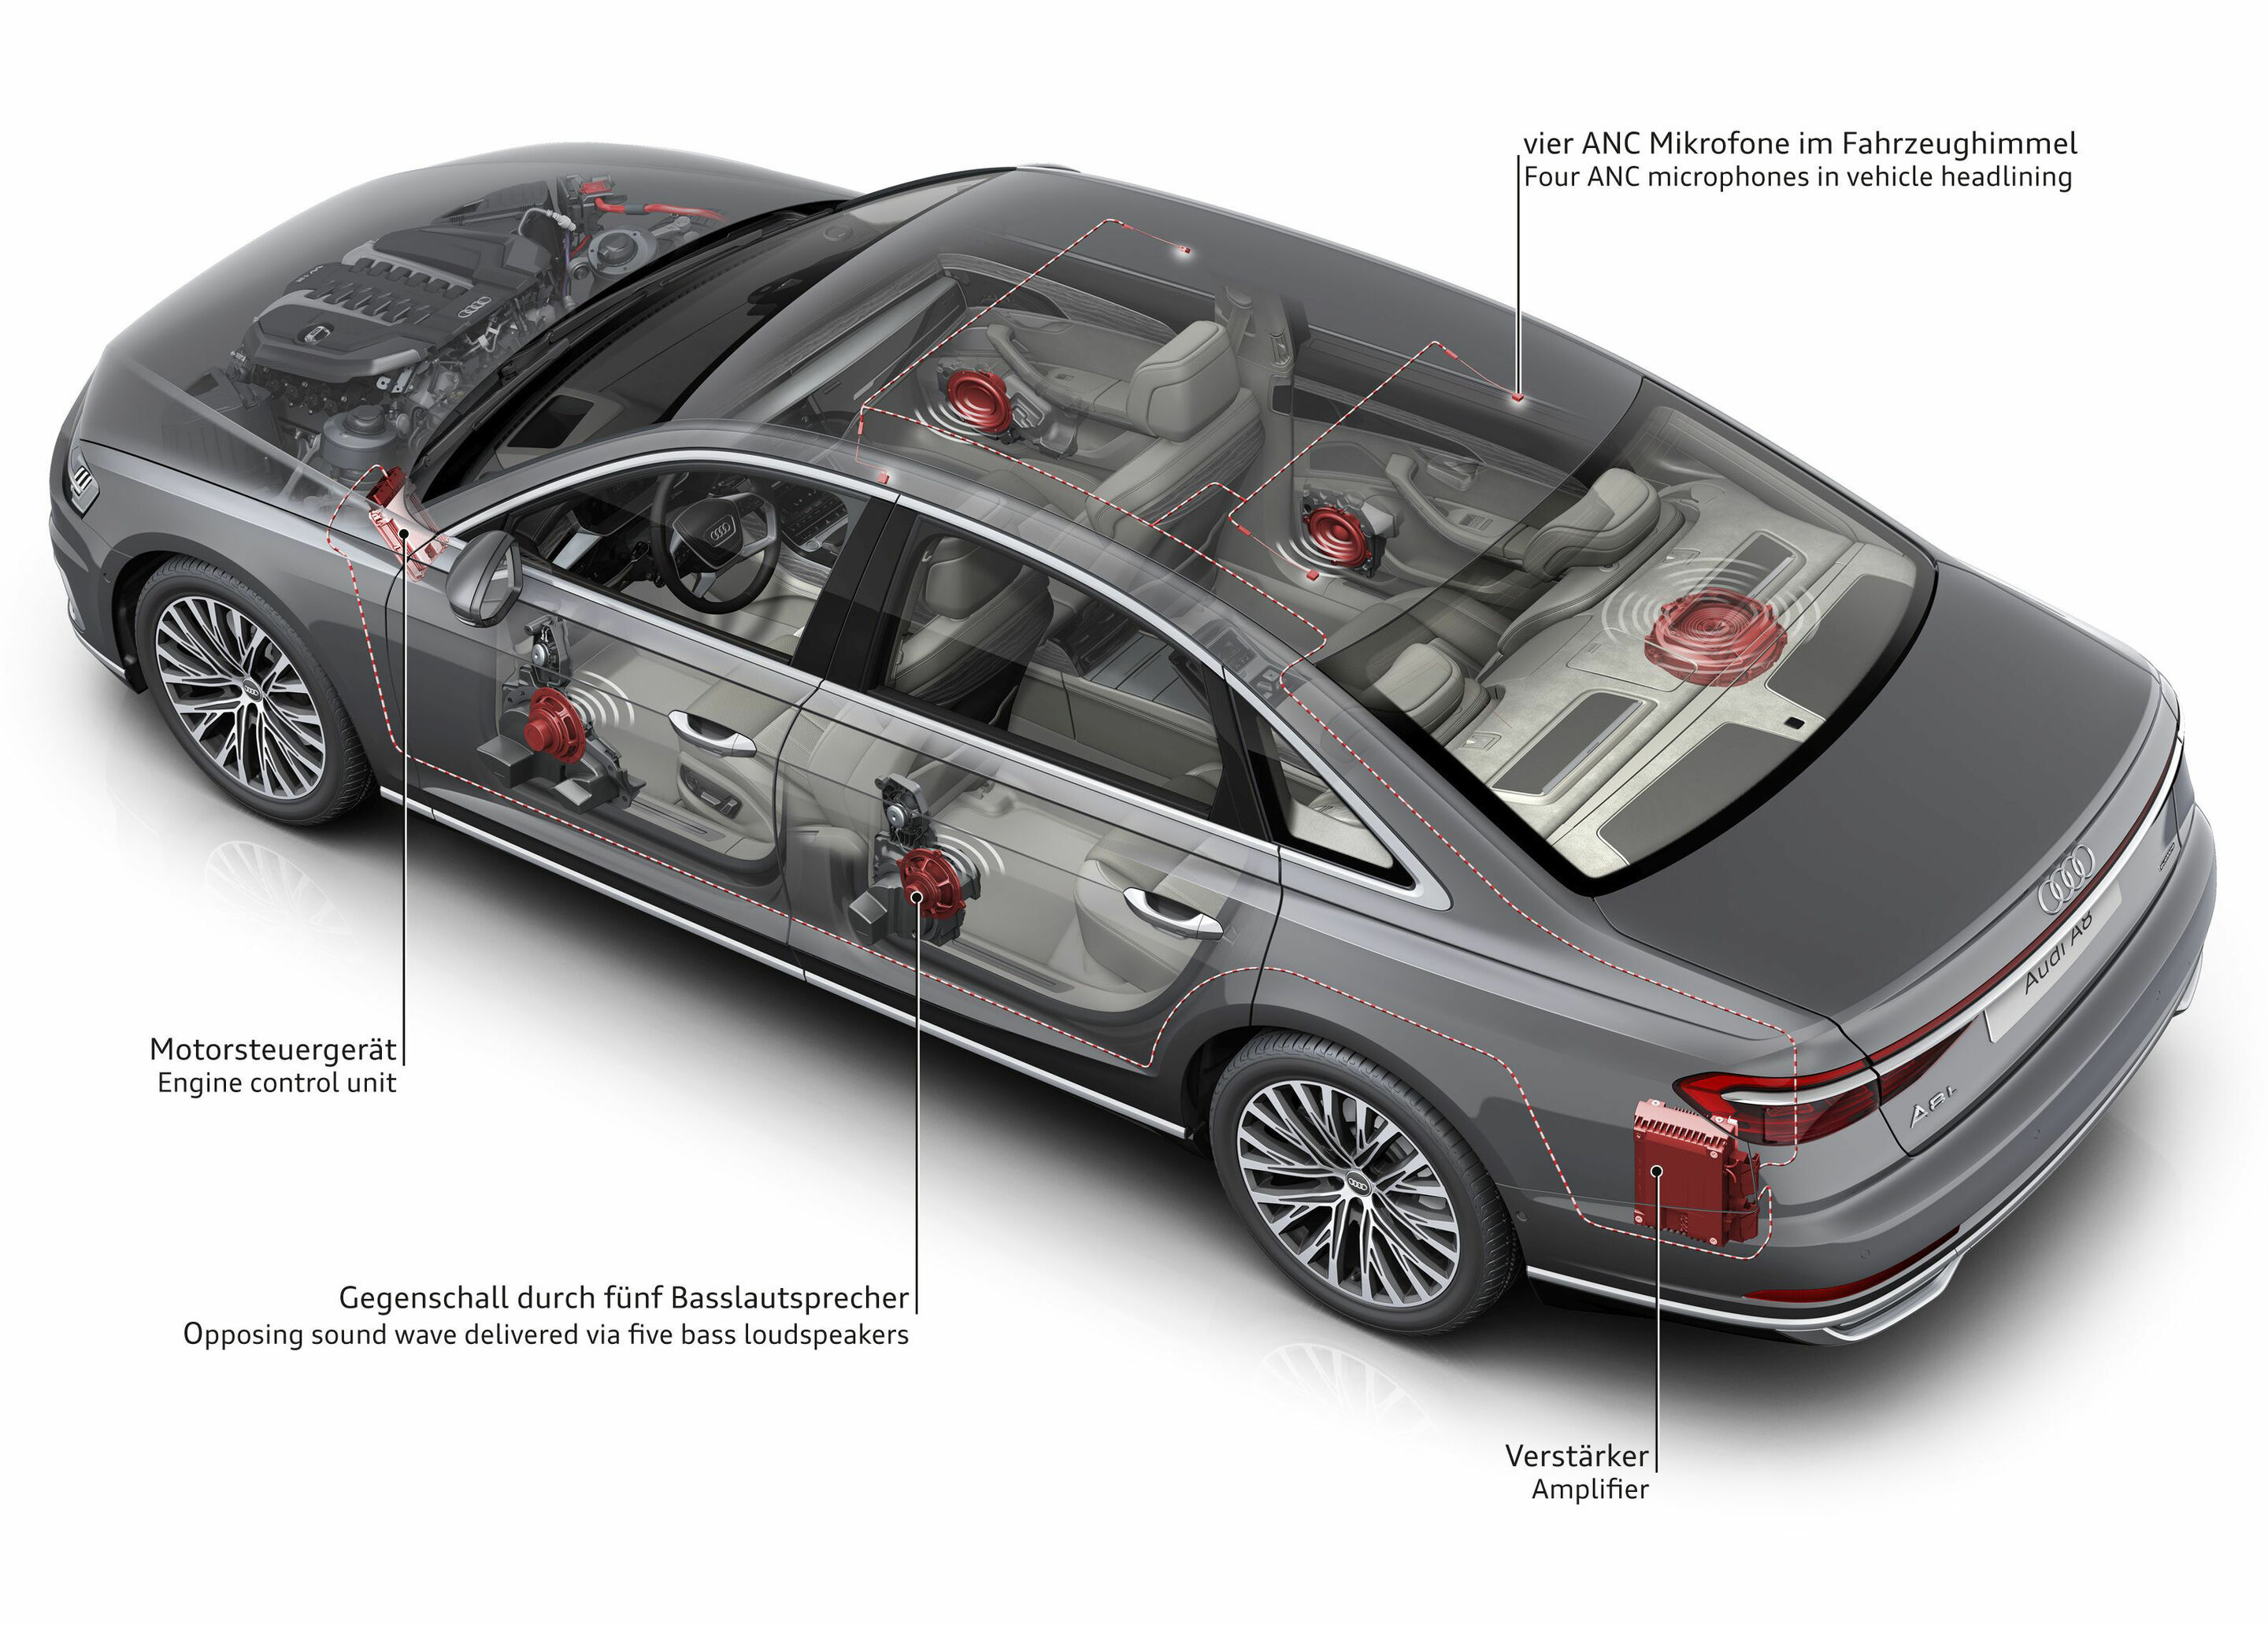 Crown gear differential - Audi Technology Portal